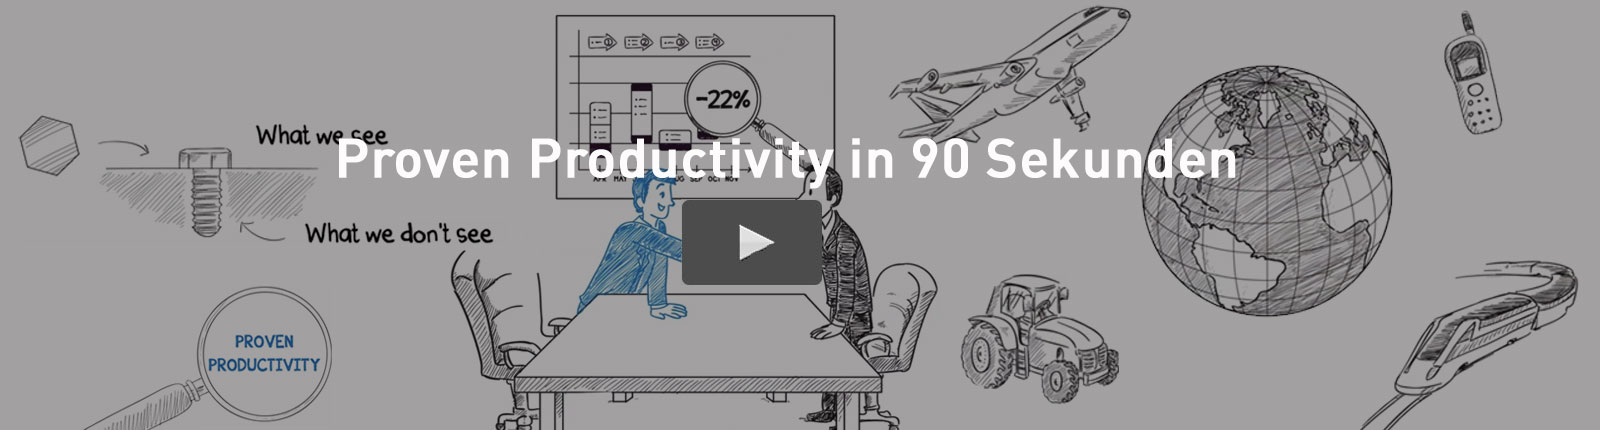 Proven Productivity in 90 Sekunden